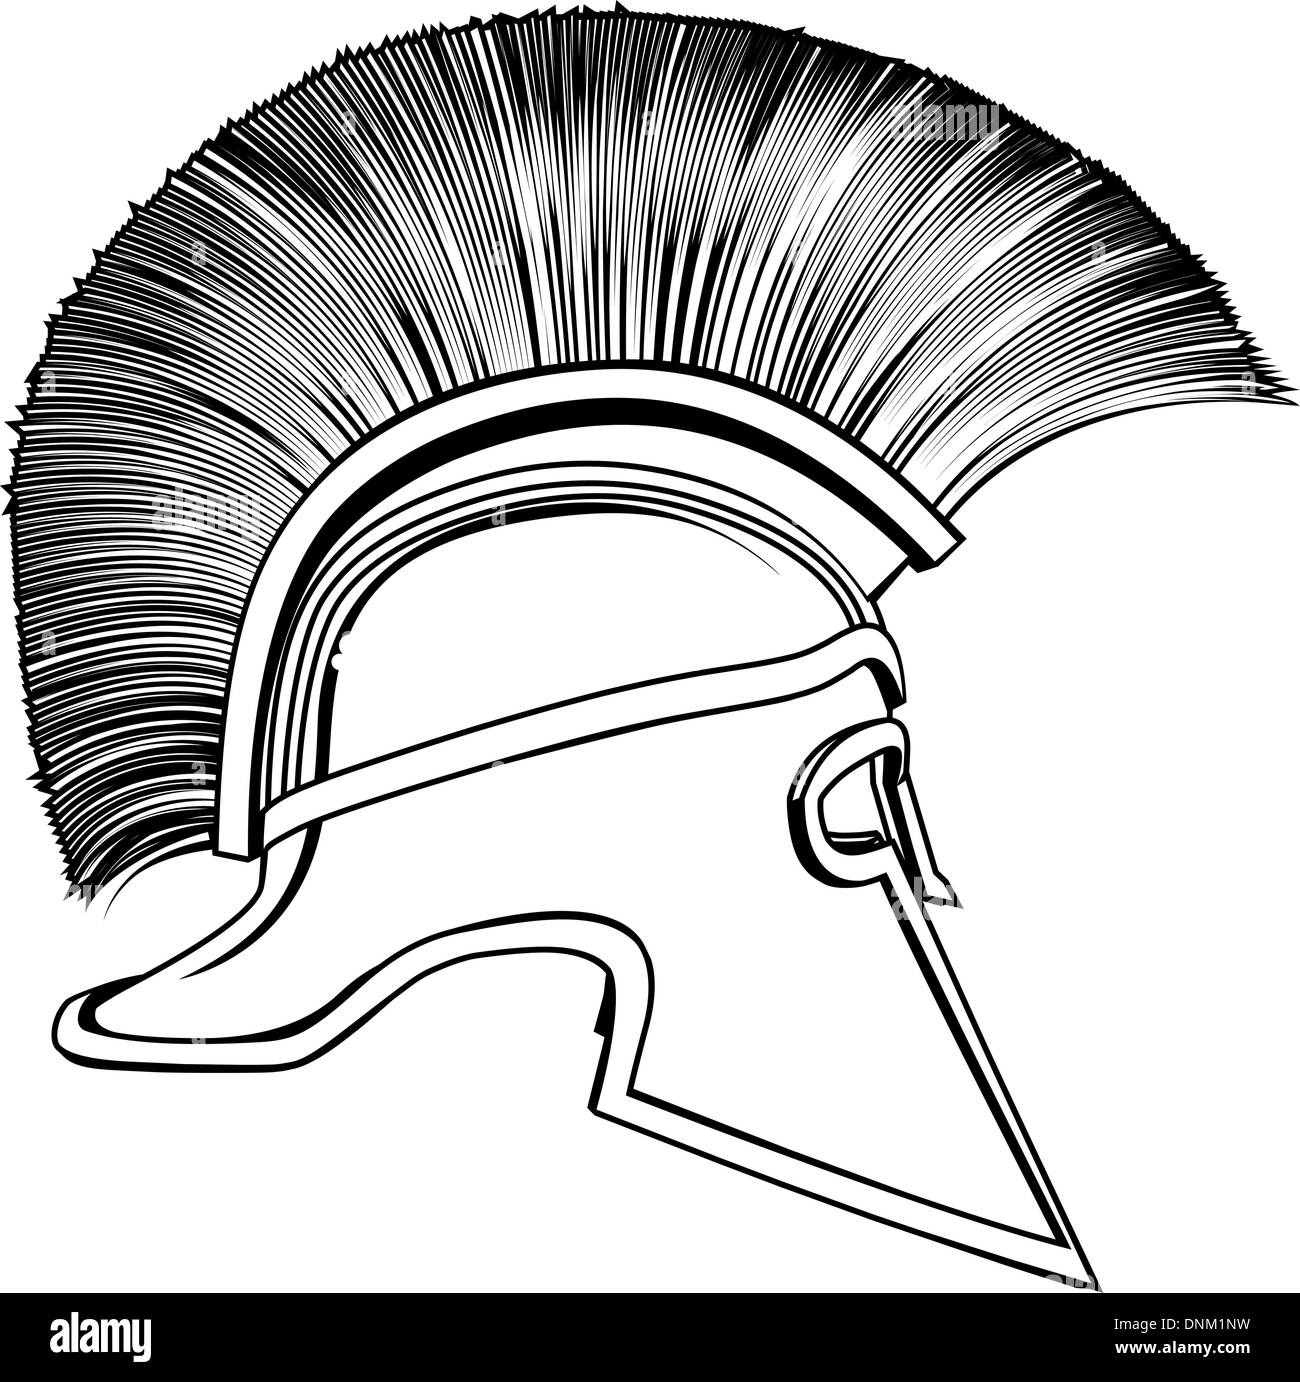 conjunto ot casco espartano aislado del fondo blanco. conjunto vectorial de  casco de guerrero romano o griego 5490154 Vector en Vecteezy